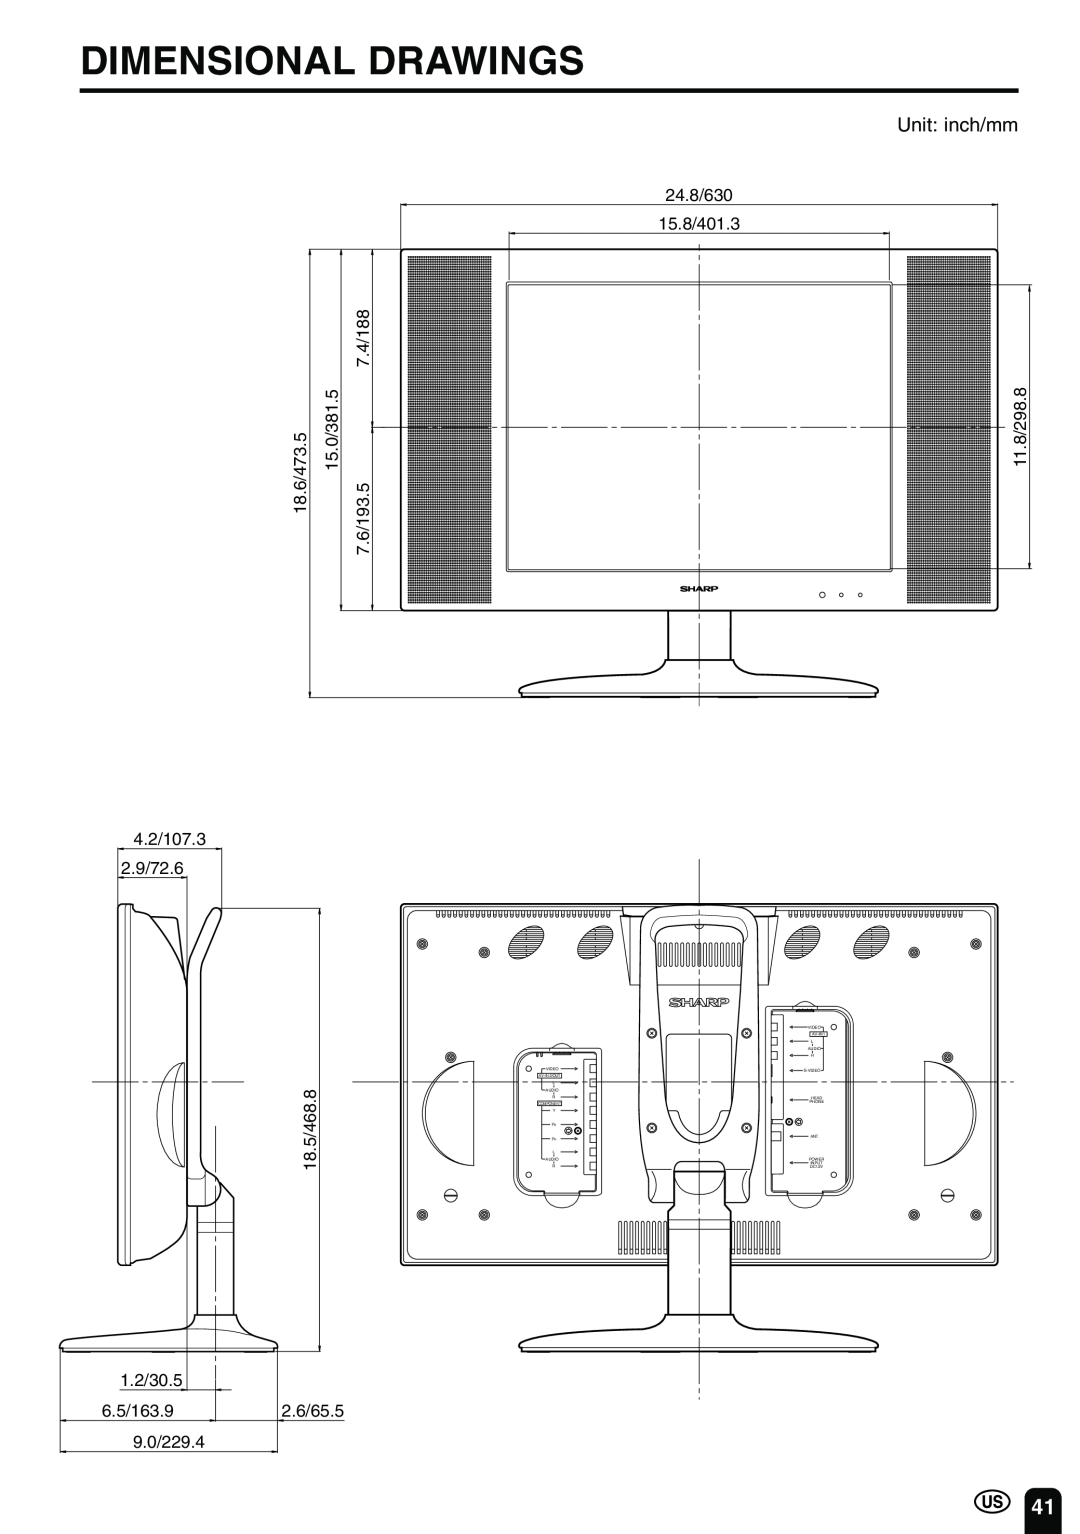 Sharp LC-20B2UA operation manual Dimensional Drawings, Unit inch/mm 